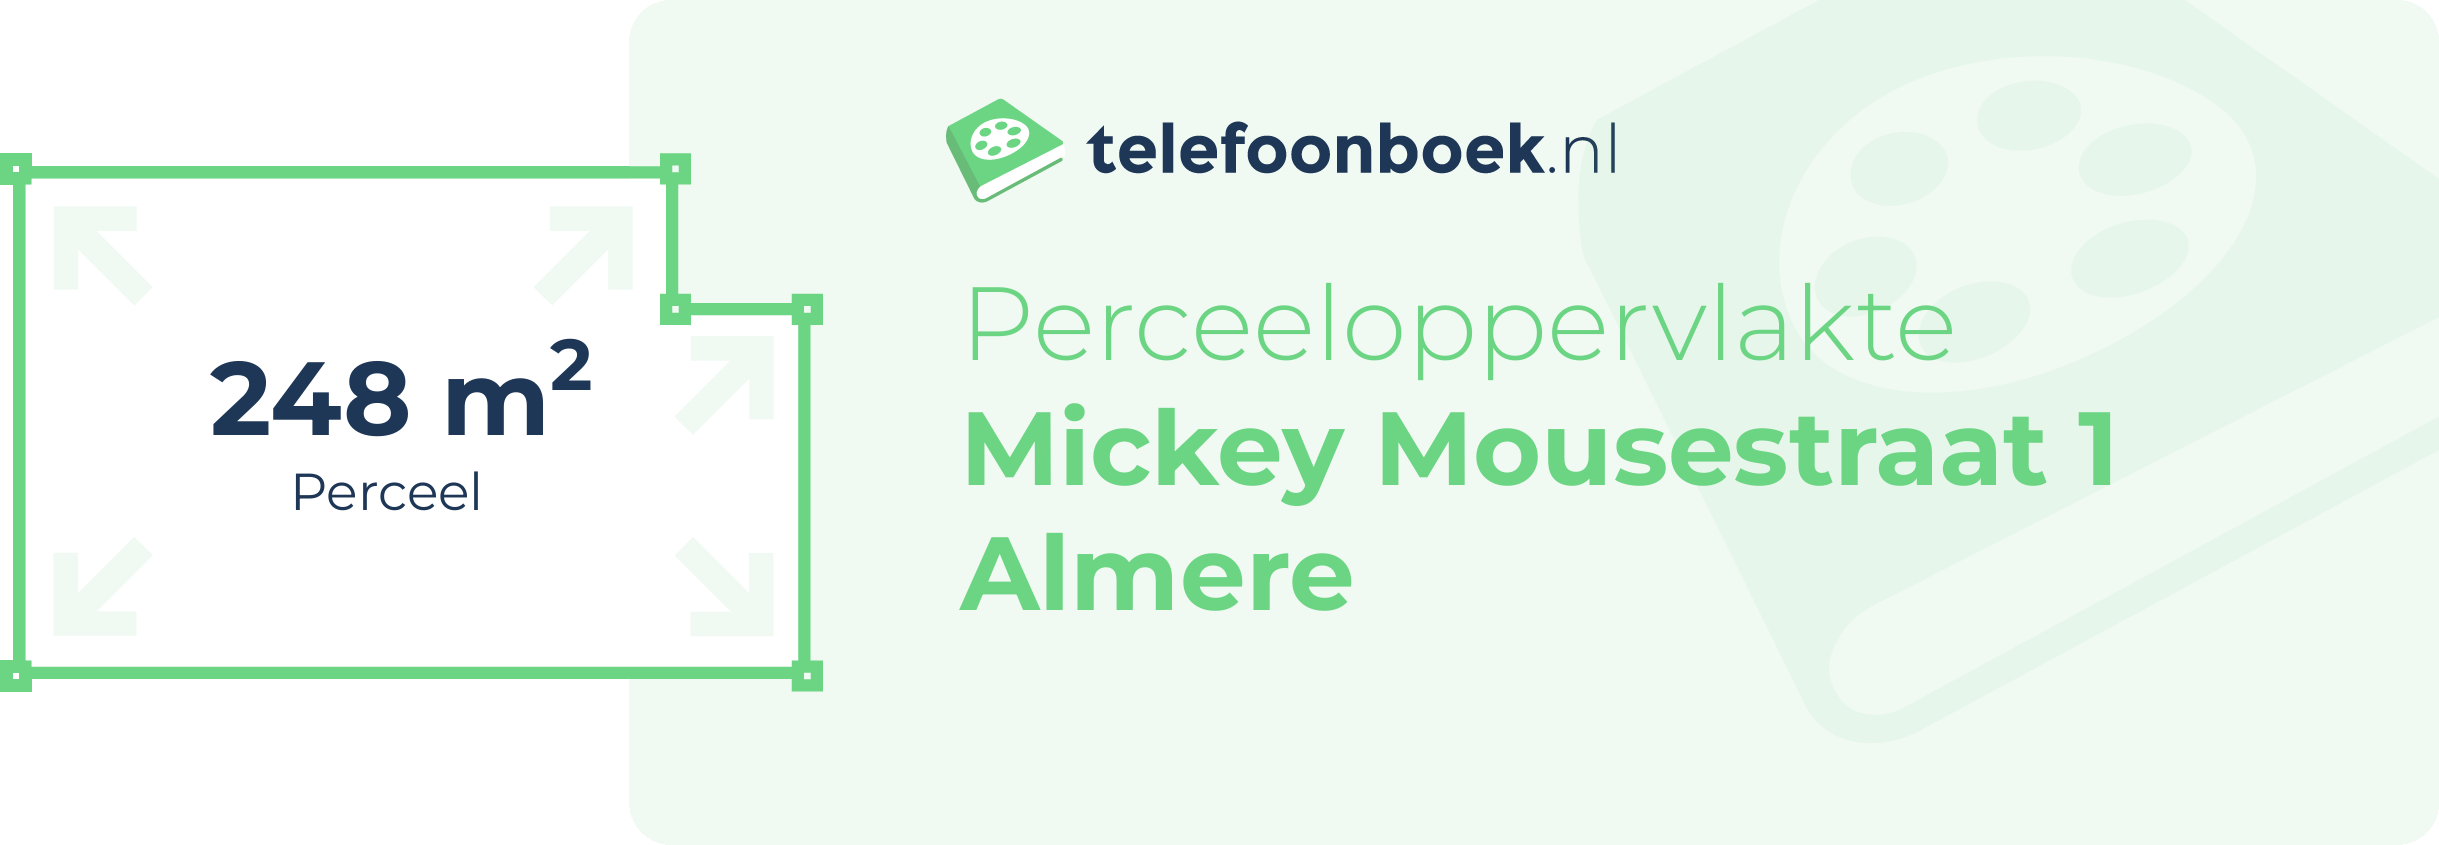 Perceeloppervlakte Mickey Mousestraat 1 Almere